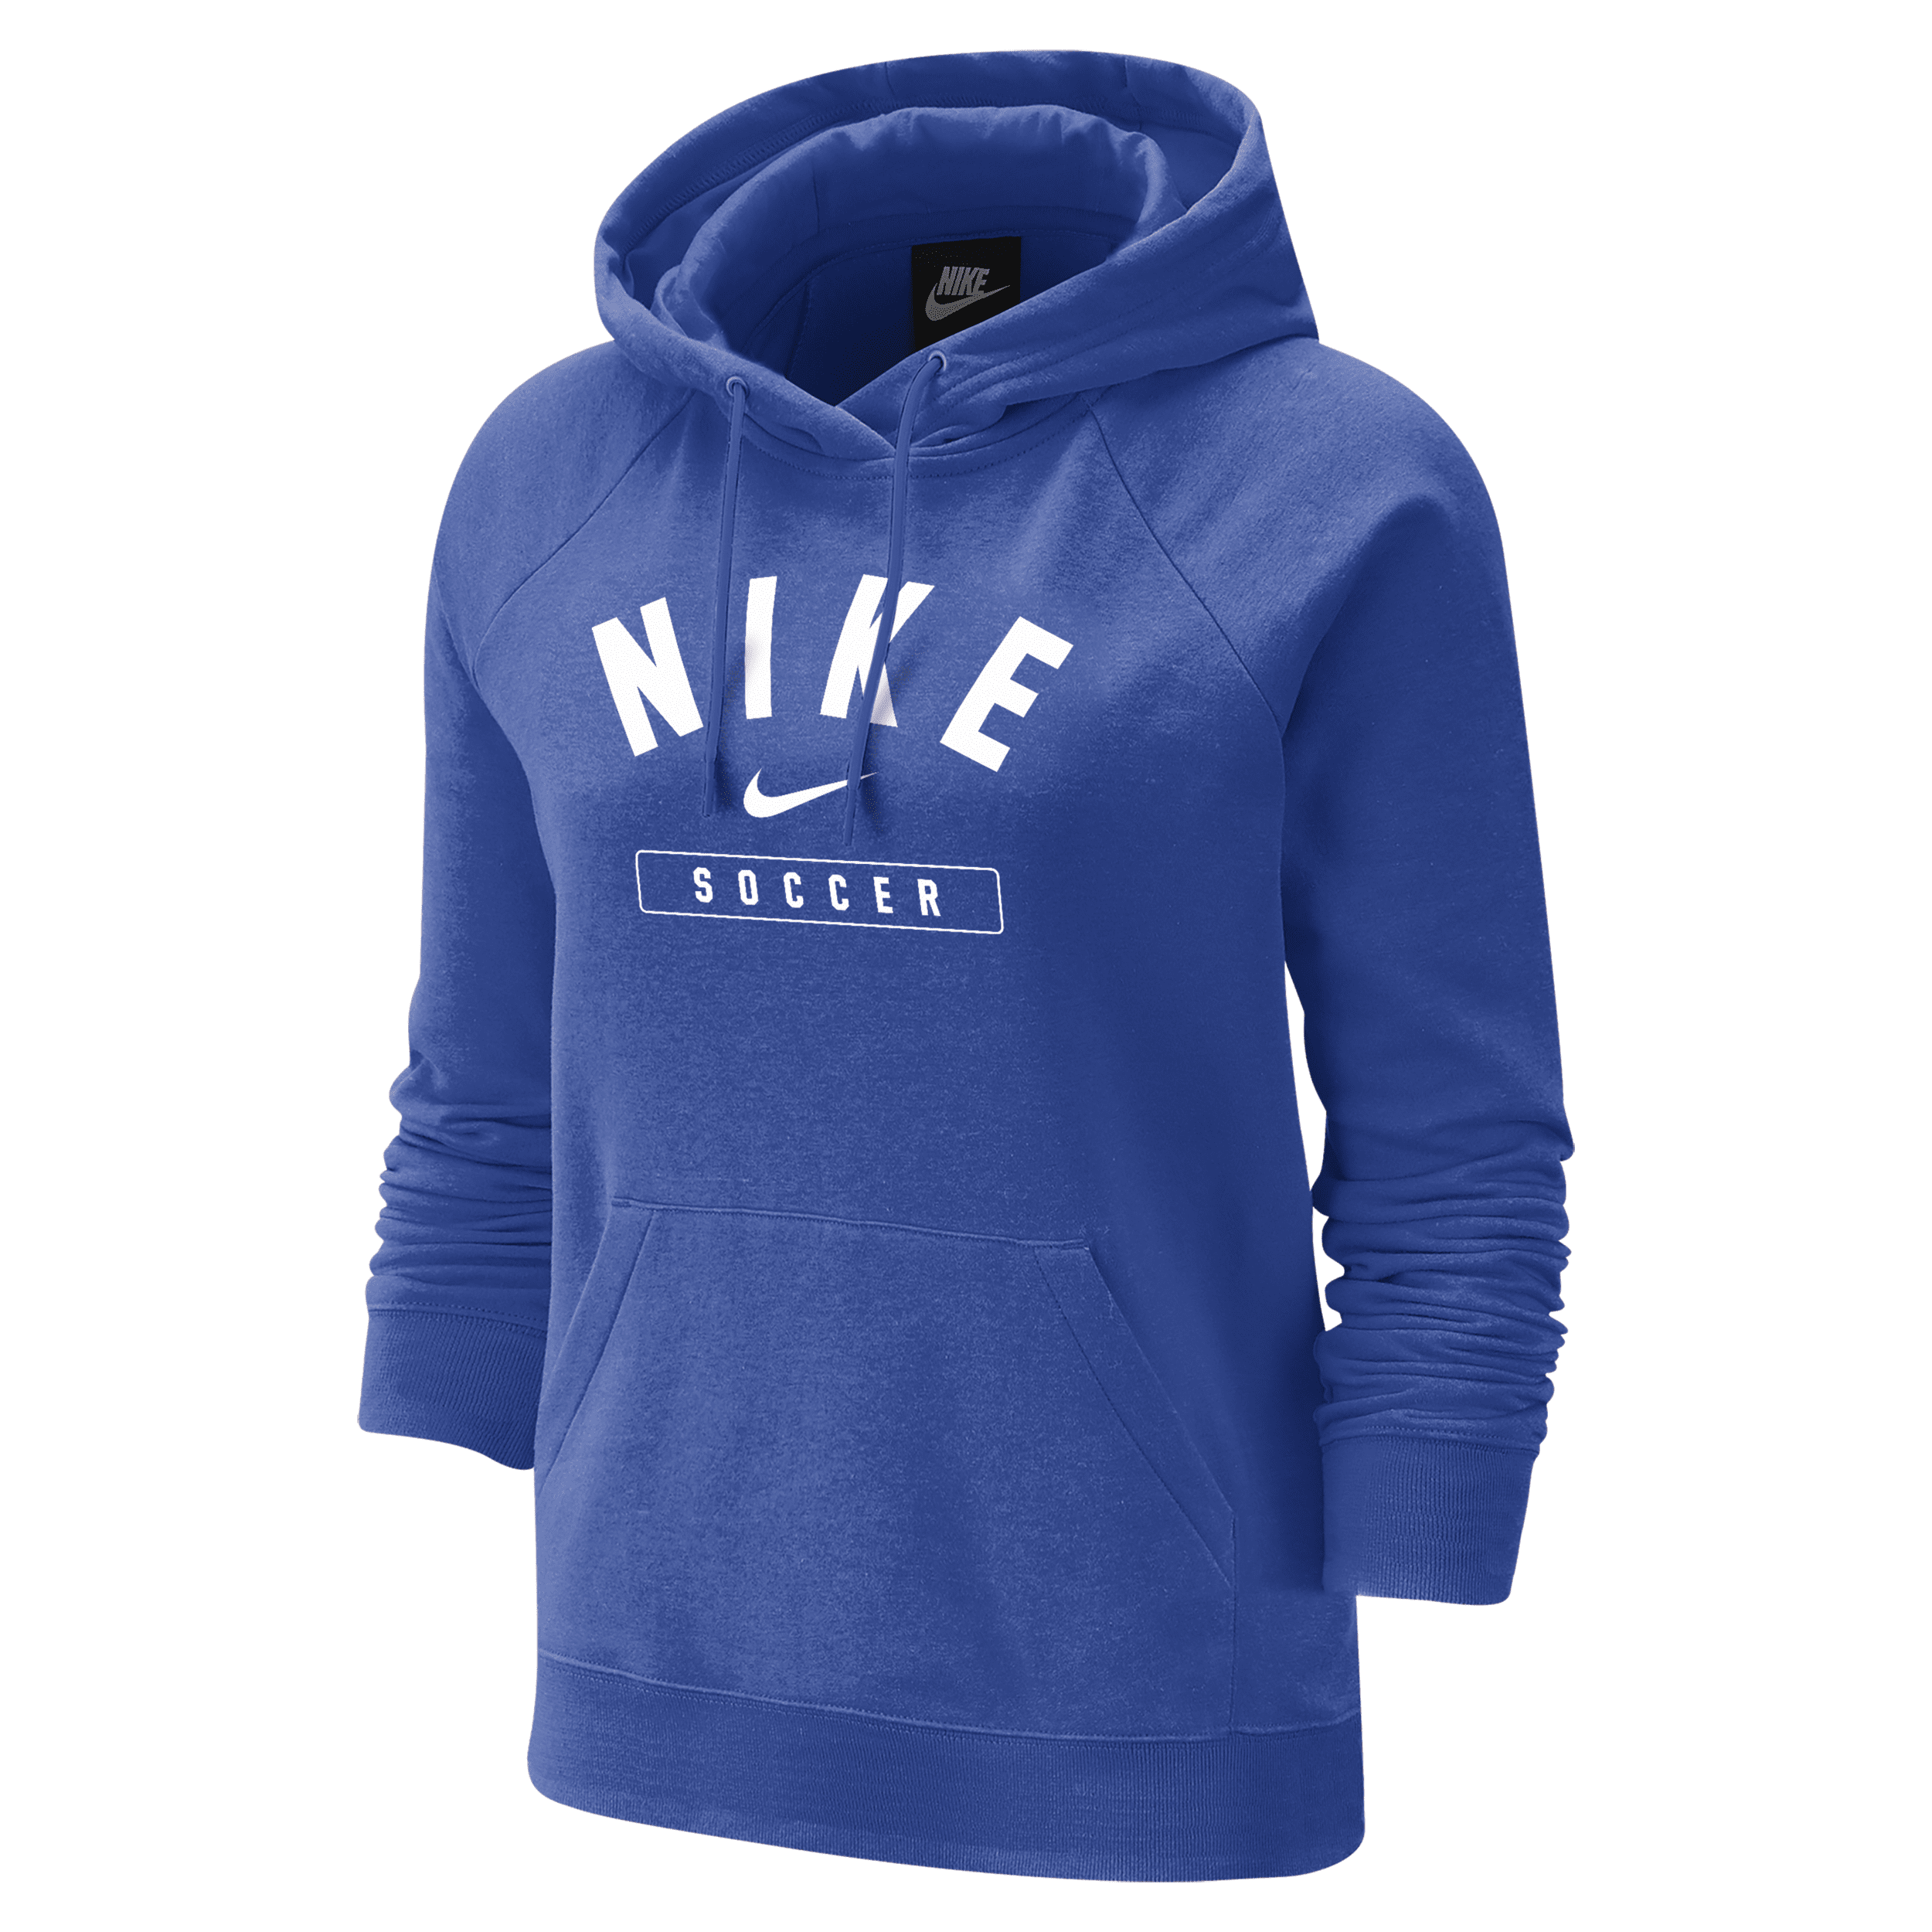 Nike Women's Soccer Pullover Hoodie In Blue